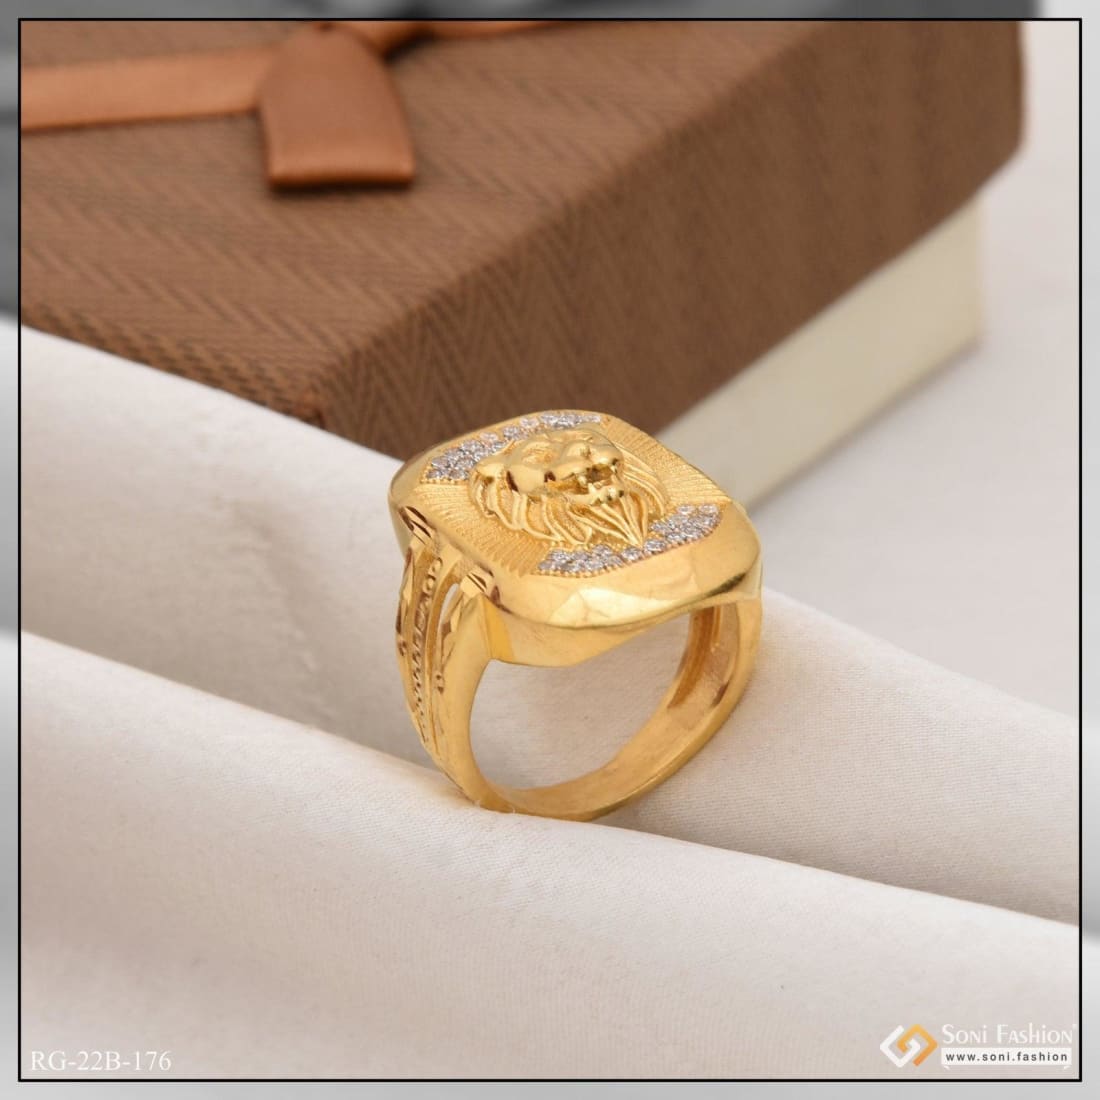 1 gram gold forming jaguar with diamond artisanal design ring for men –  Soni Fashion®